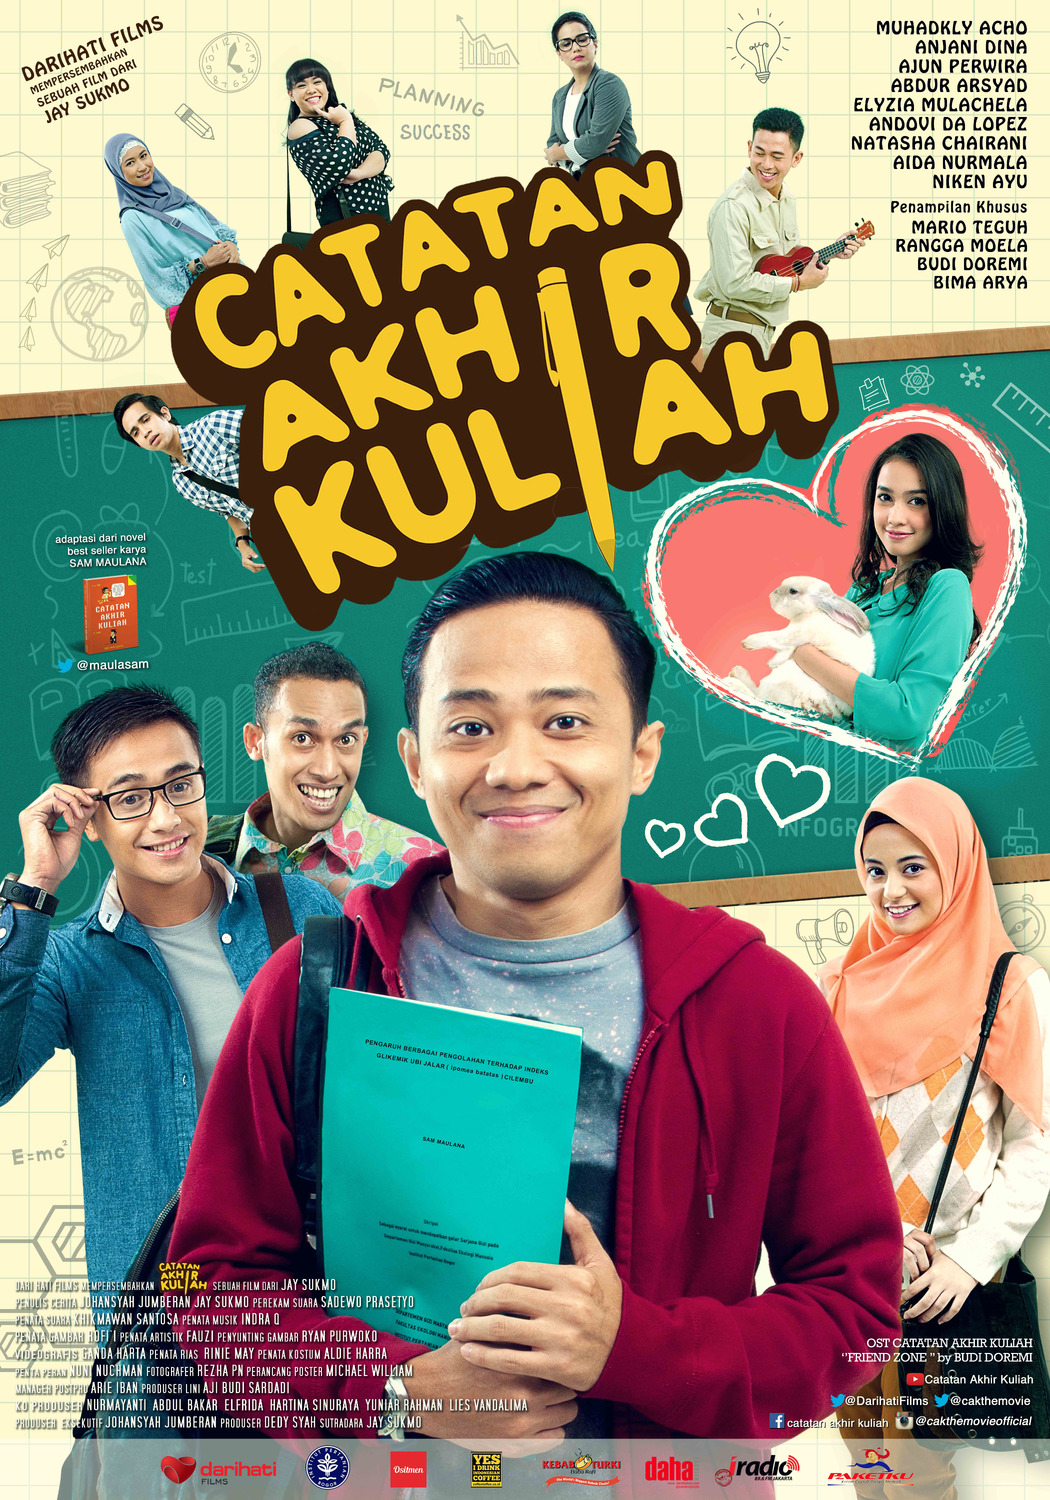 Extra Large Movie Poster Image for Catatan Akhir Kuliah (#2 of 2)